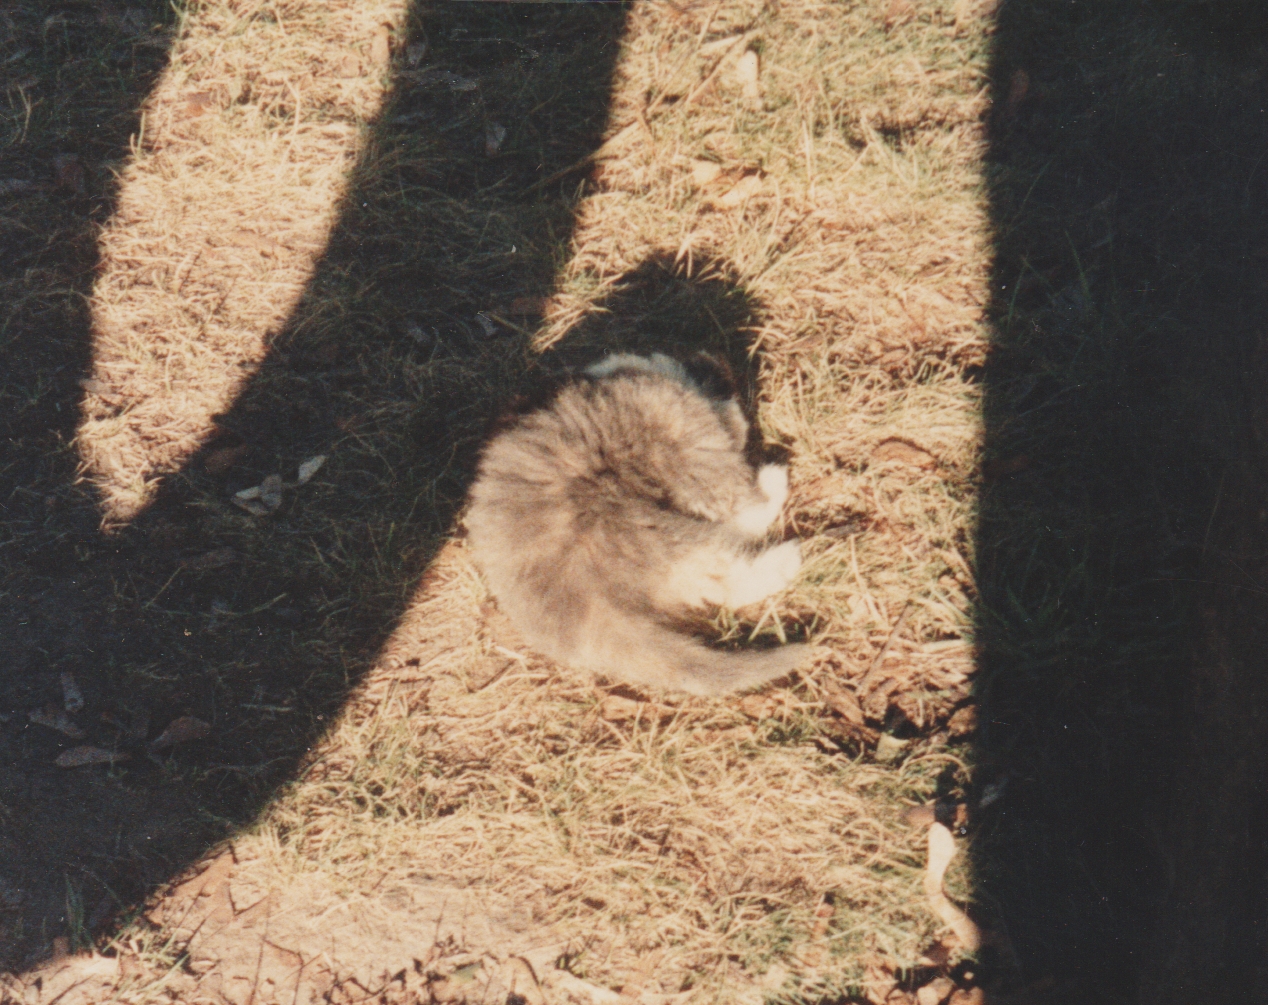 1991 - Gray Cat.jpg